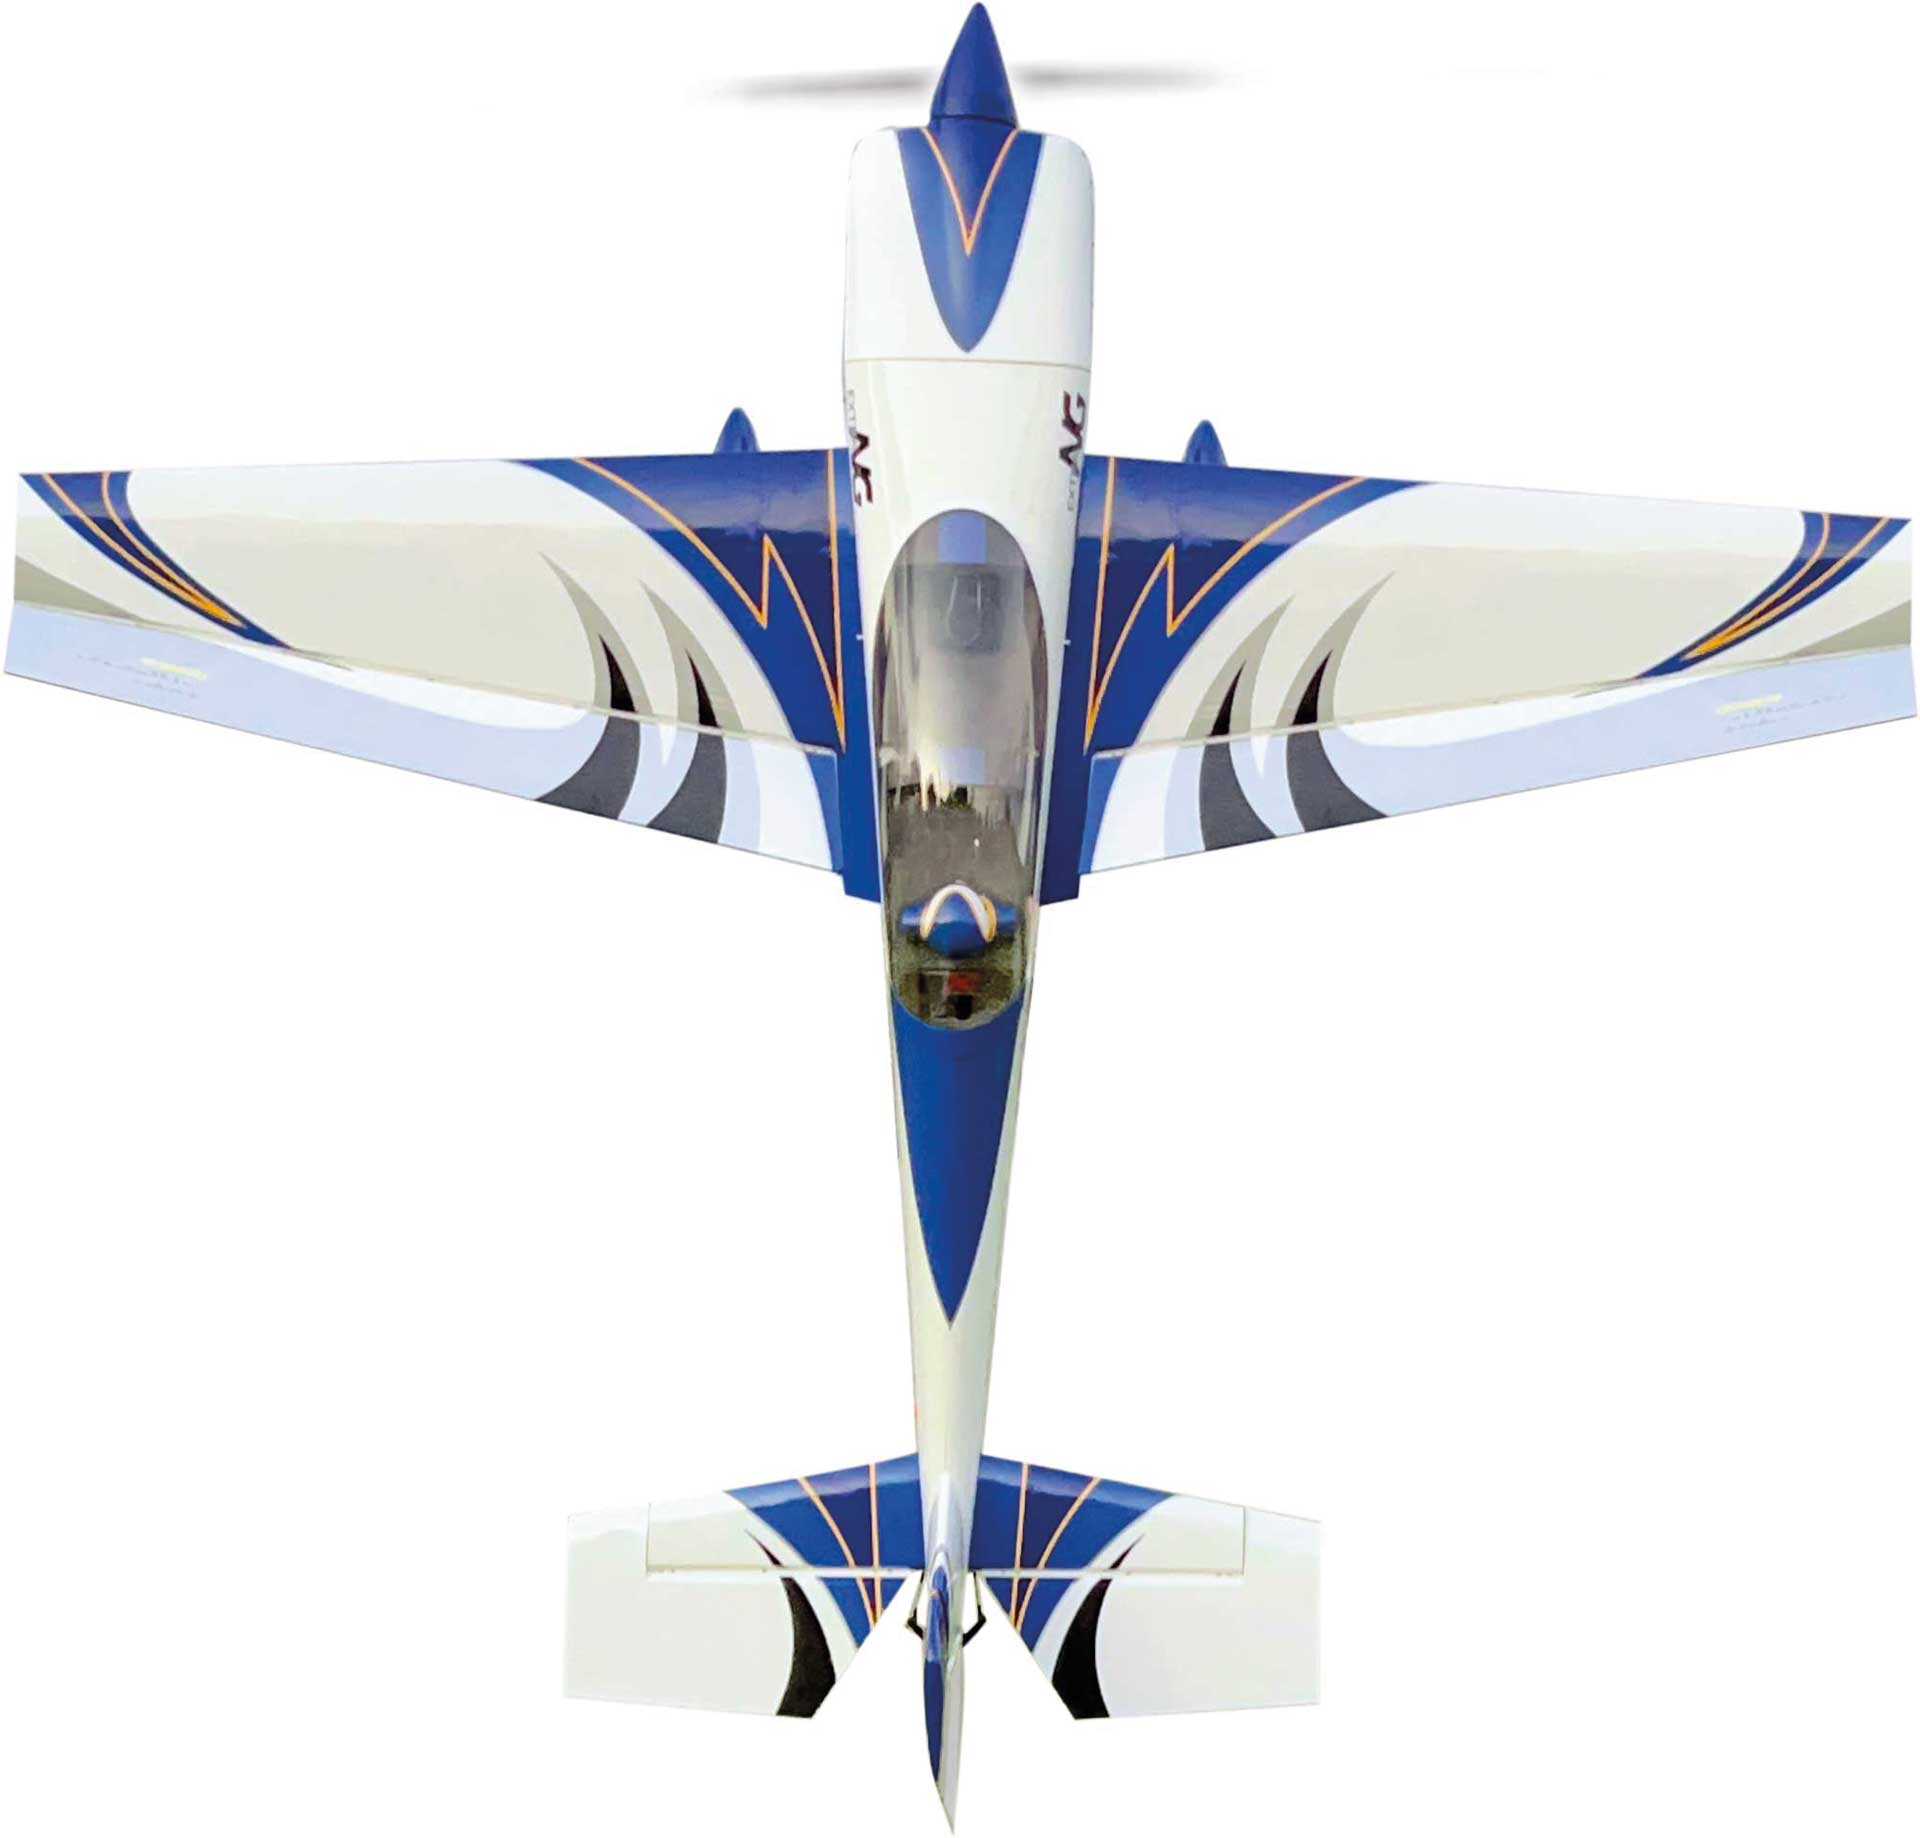 EXTREMEFLIGHT-RC EXTRA NG 114"  blau/weiss/silber ARF Kunstflugmodell